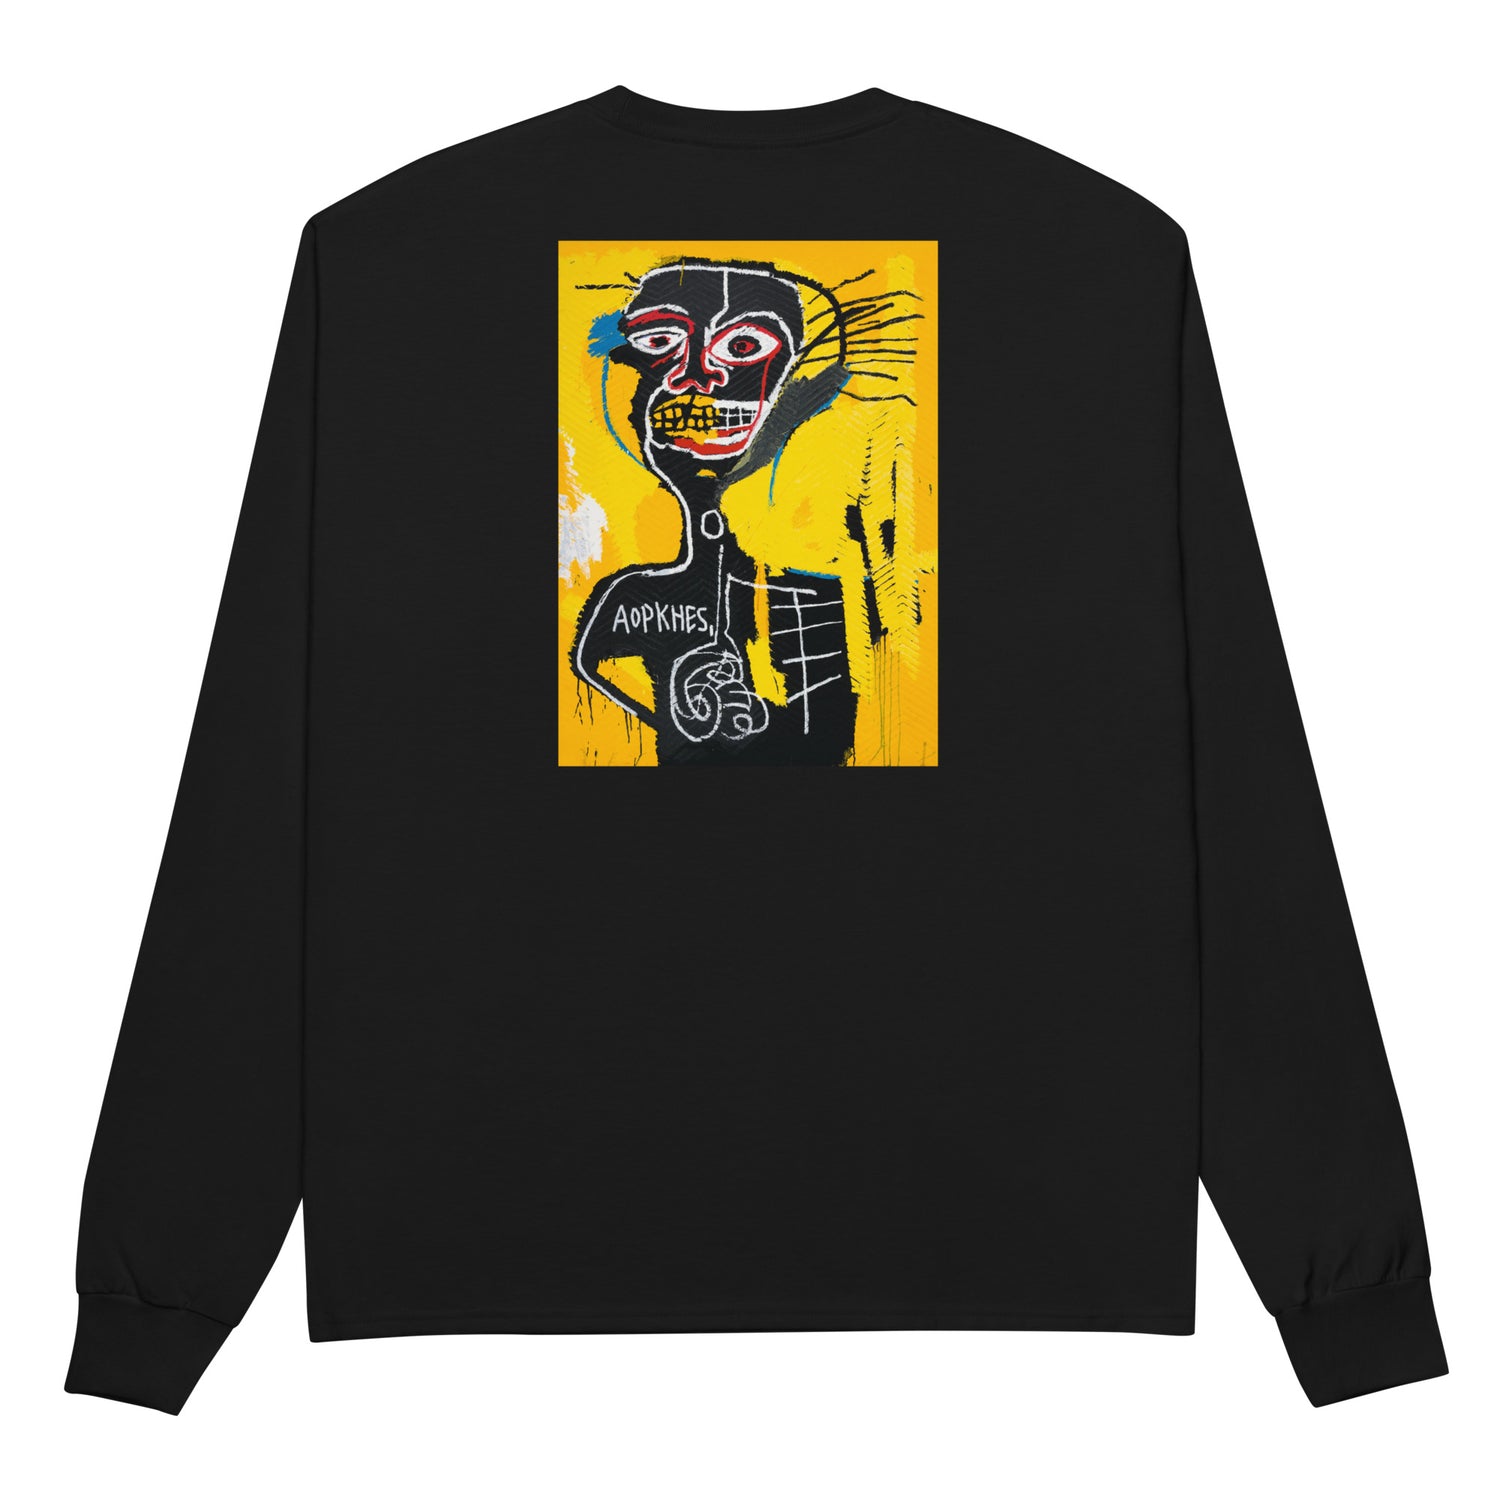 Jean-Michel Basquiat "Cabeza" Artwork Embroidered + Printed Premium Champion Streetwear Long Sleeve Shirt Black